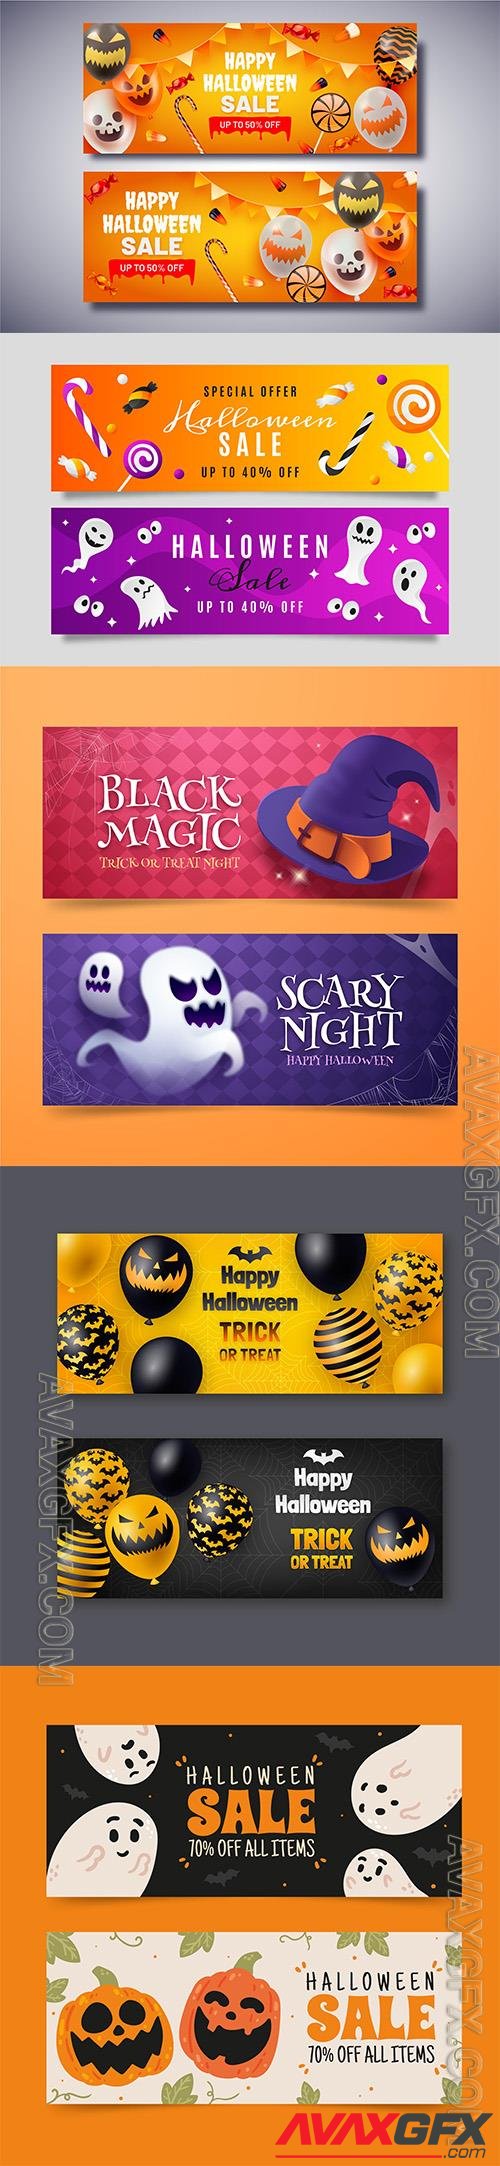 Halloween horizontal banners set